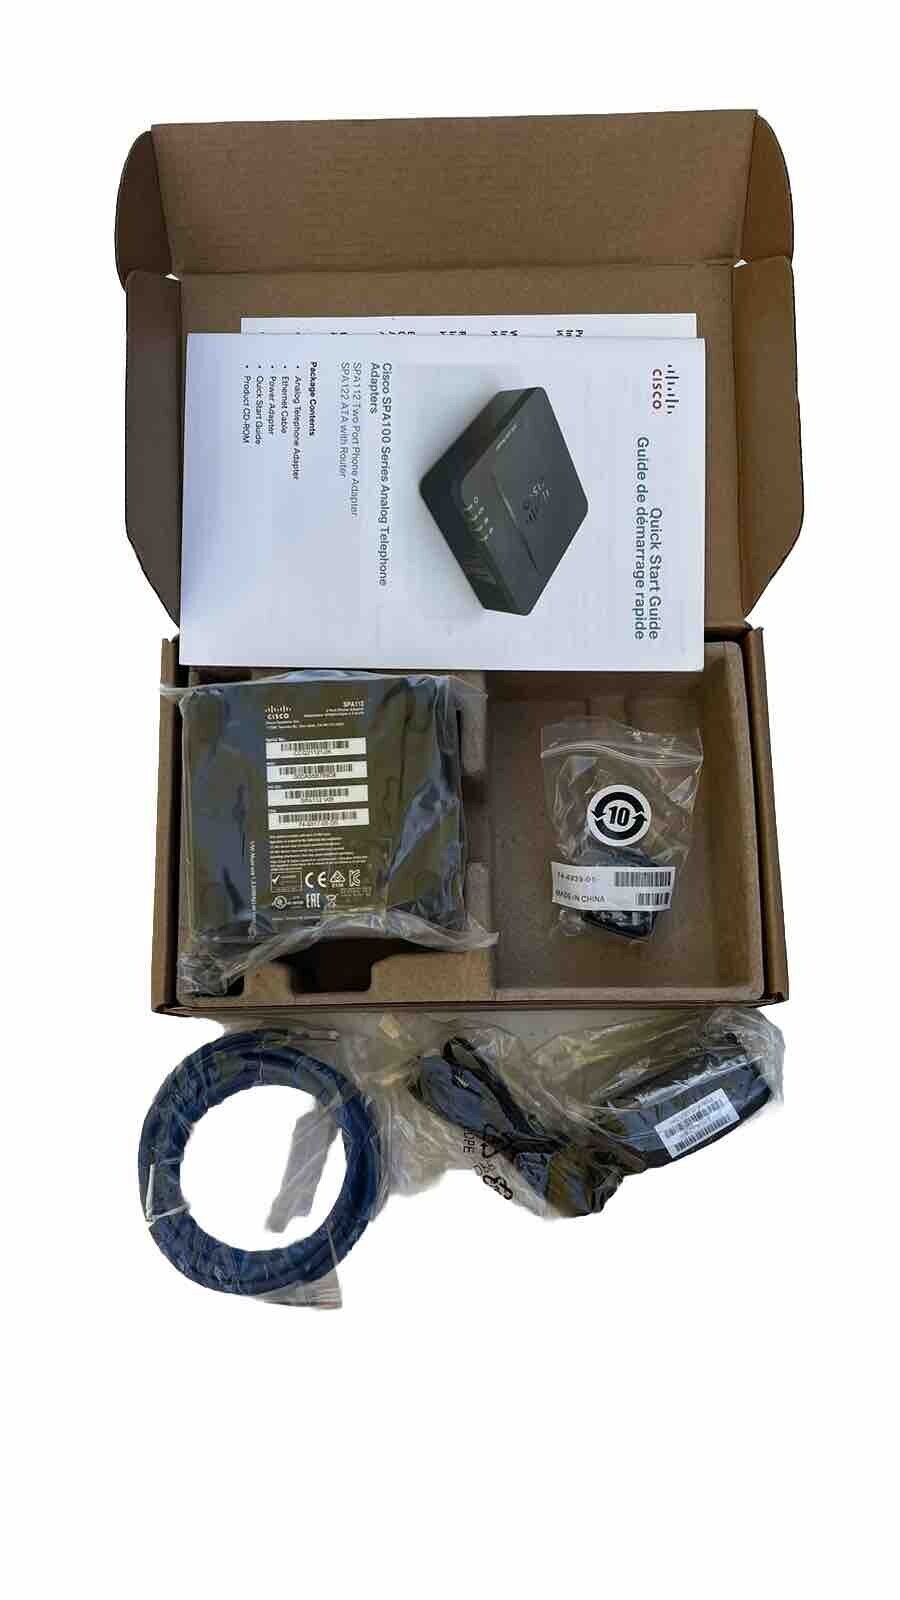 Cisco SPA122 V05 2 Port Phone Adapter New Open Box  Manual